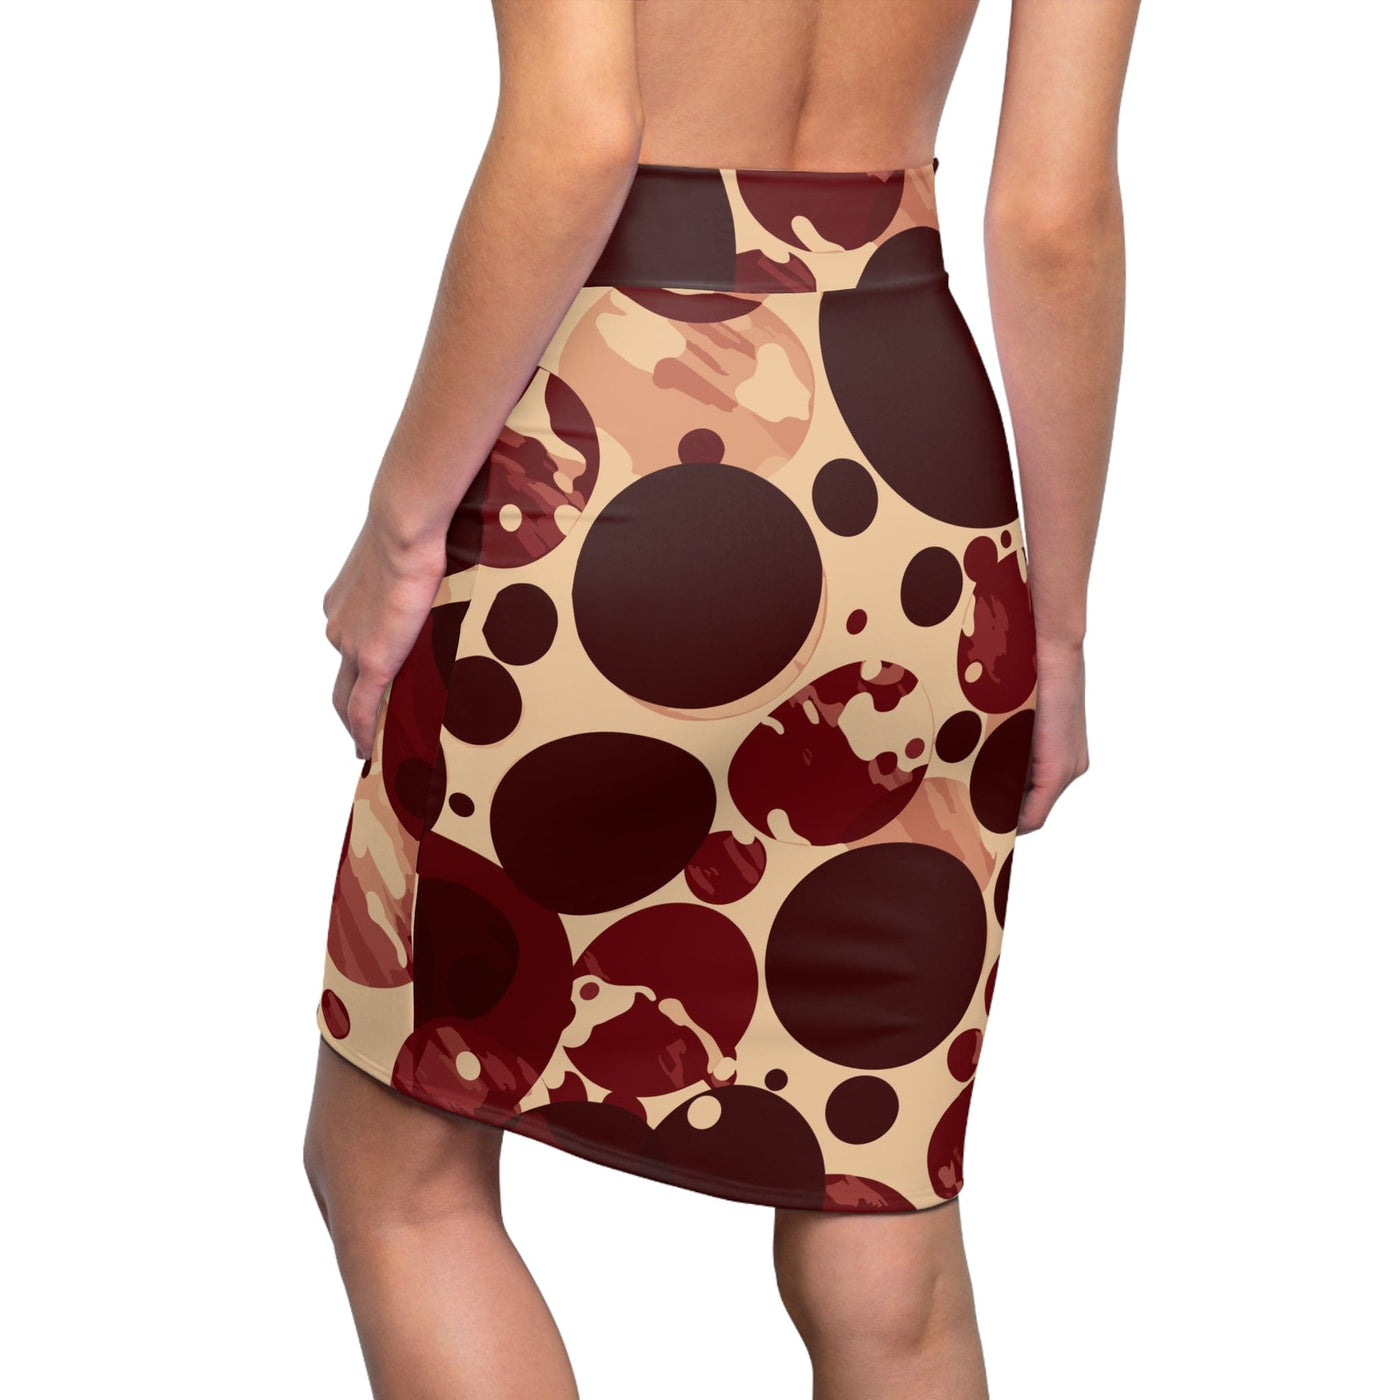 High Waist Womens Pencil Skirt - Contour Stretch - Burgundy And Beige Circular